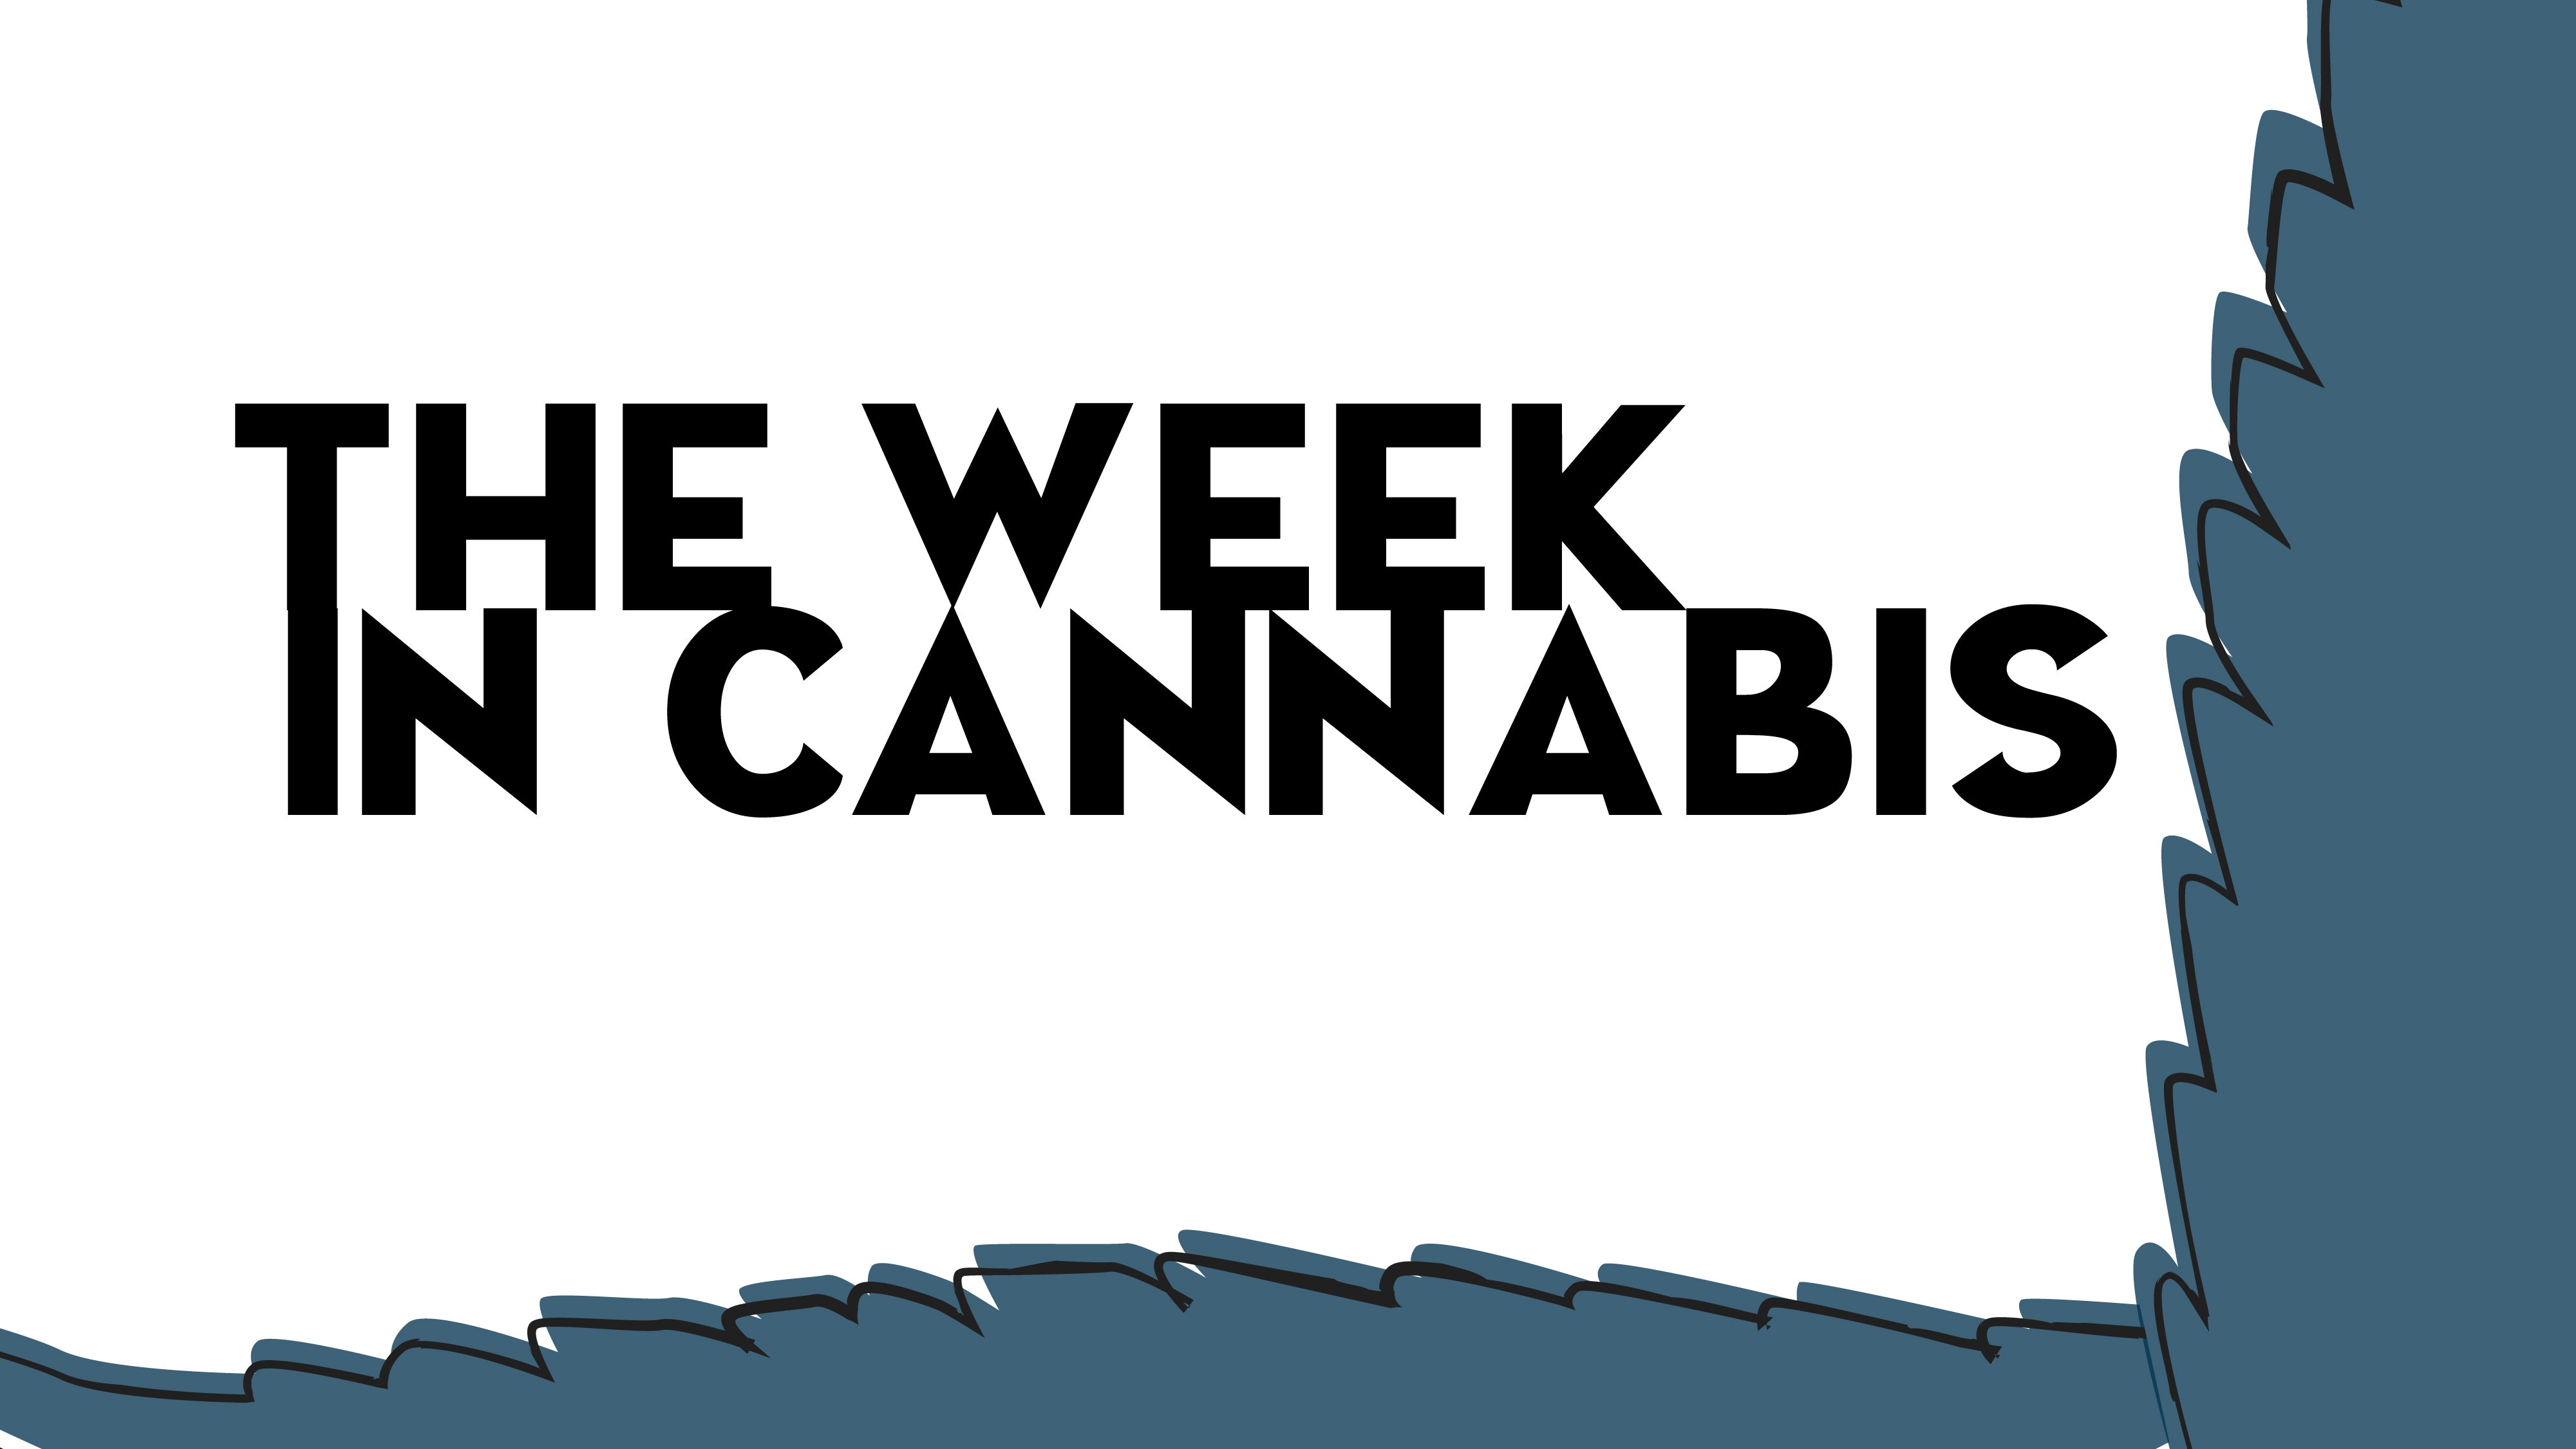 The Week In Cannabis: Pfizer, Visa, $730M+ In Financings, Malta, EU, Columbia Care, MedMen, Uruguay And More